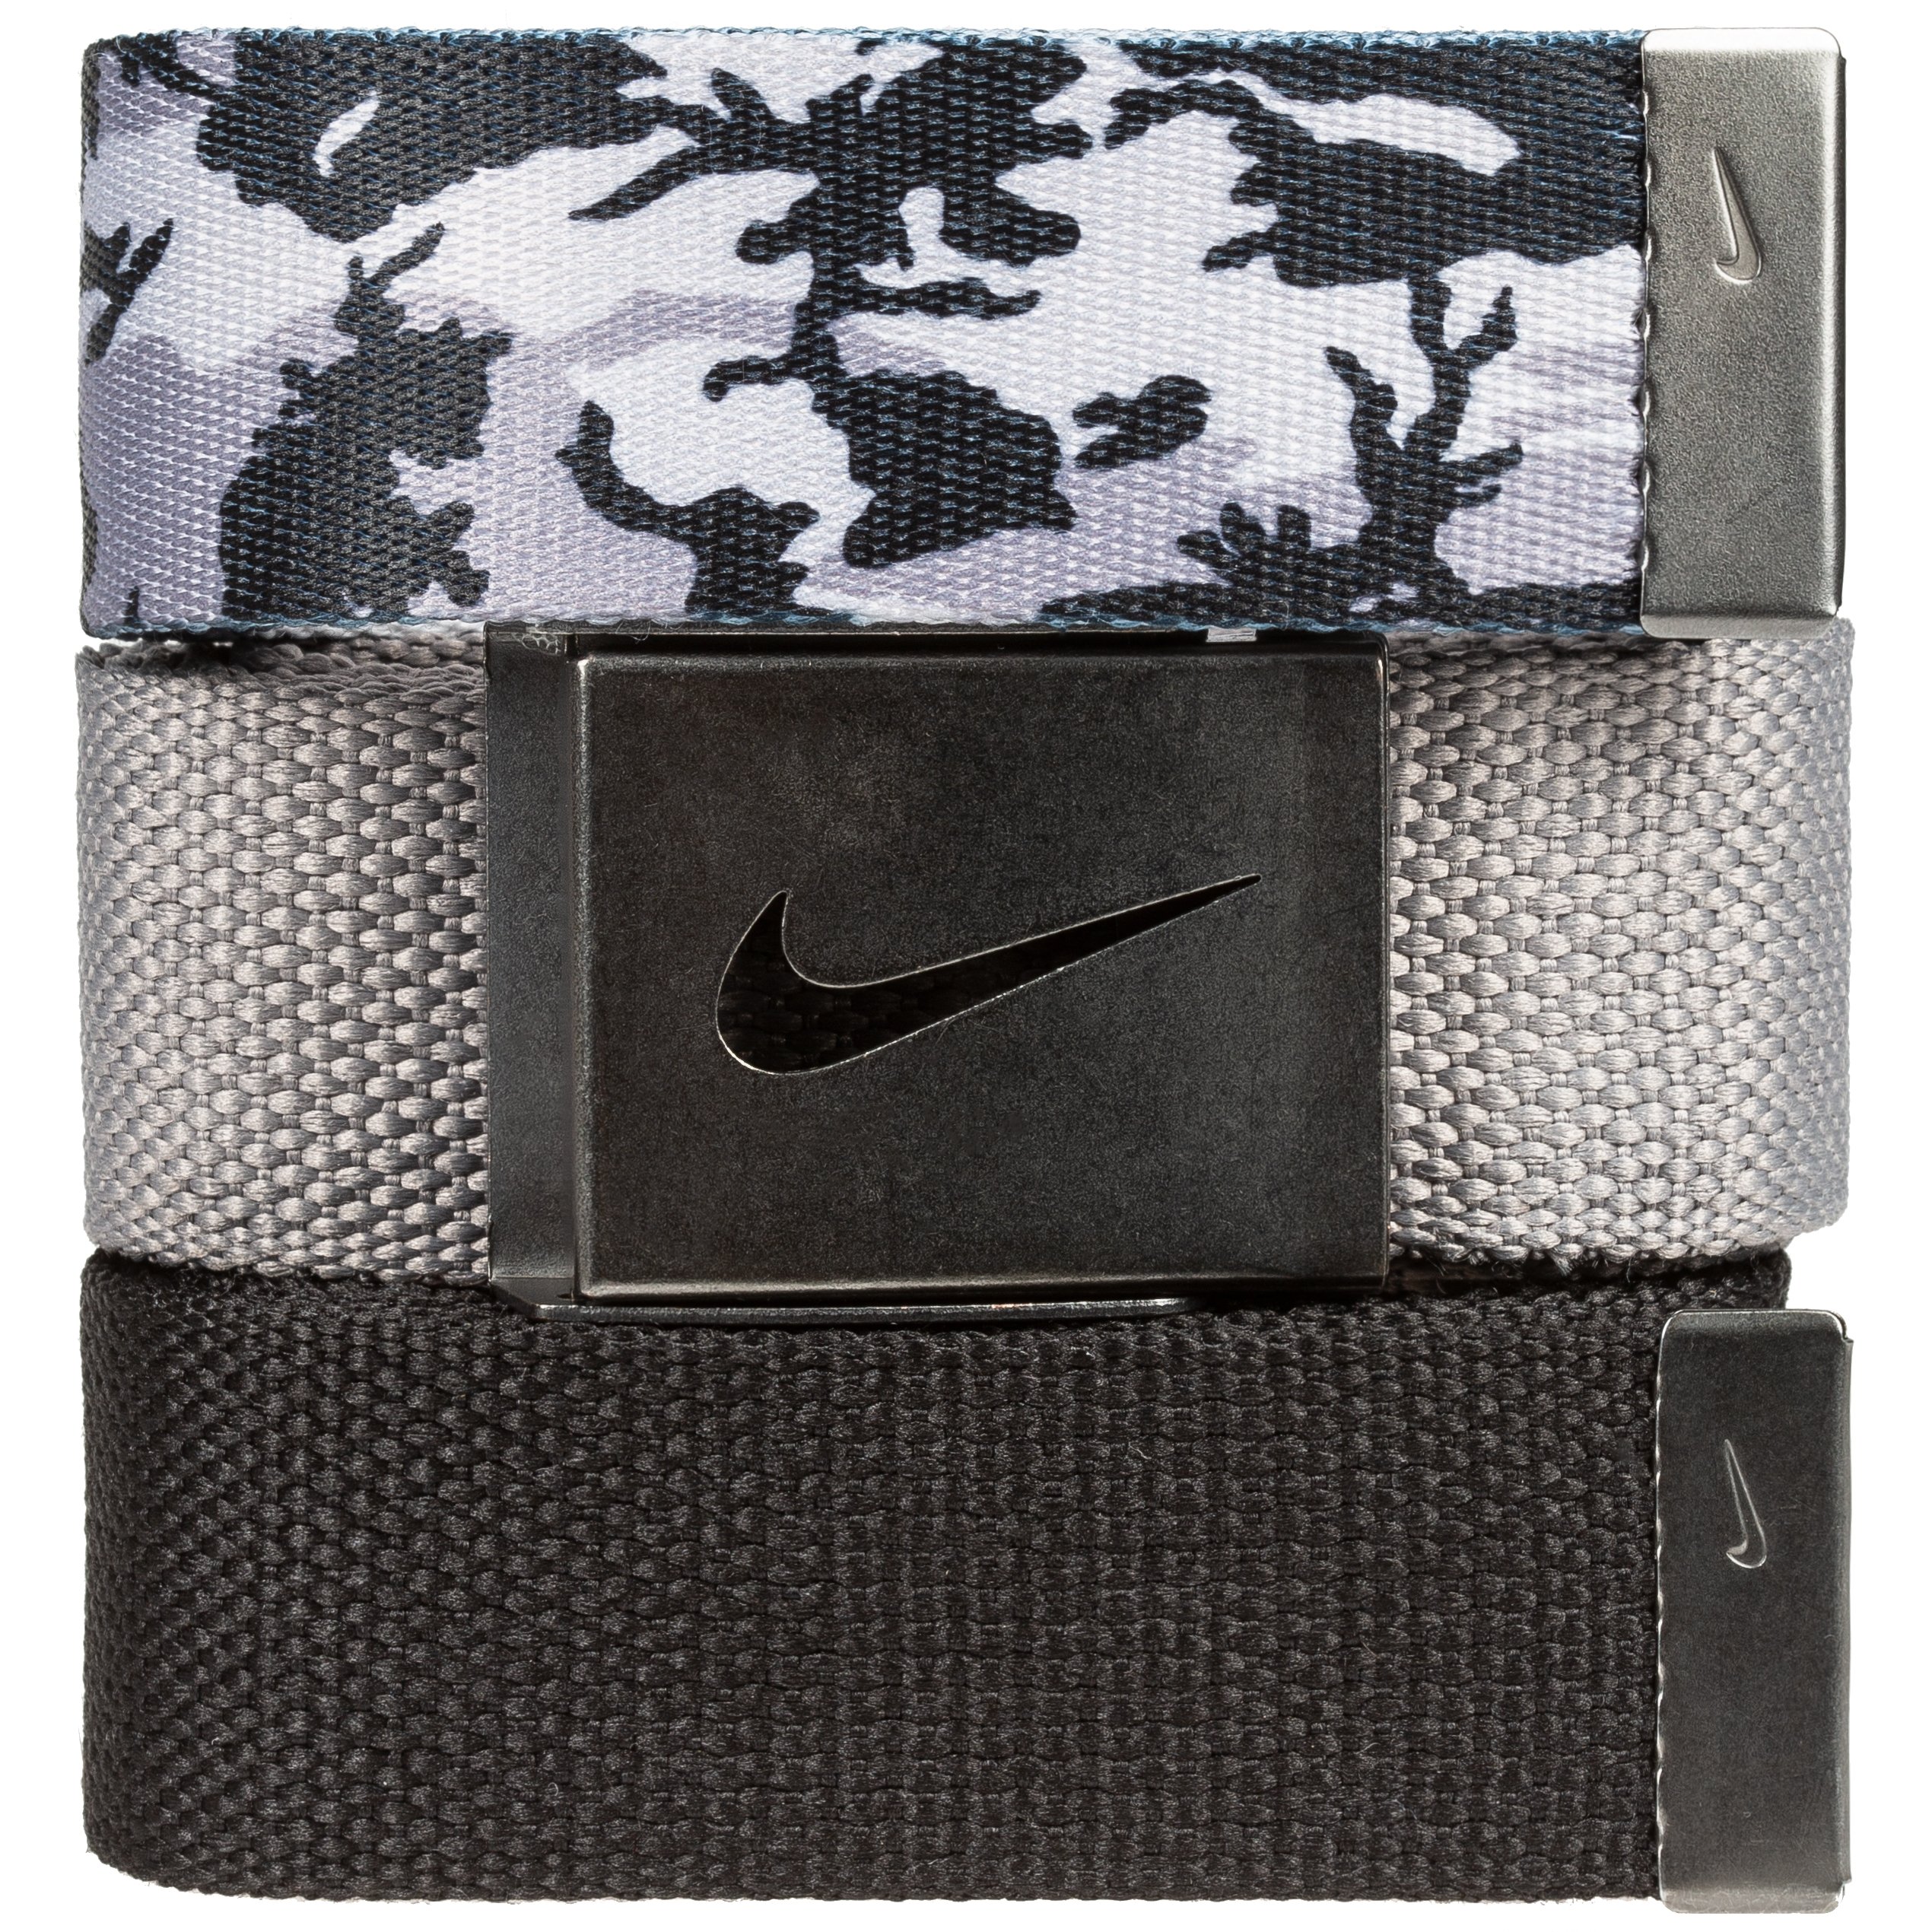 Nike Golf Men's 3-in-1 Web Belts, One Size Fits Most